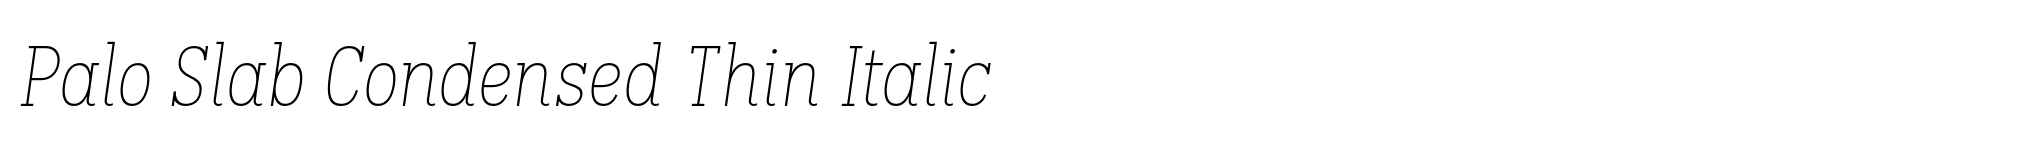 Palo Slab Condensed Thin Italic image